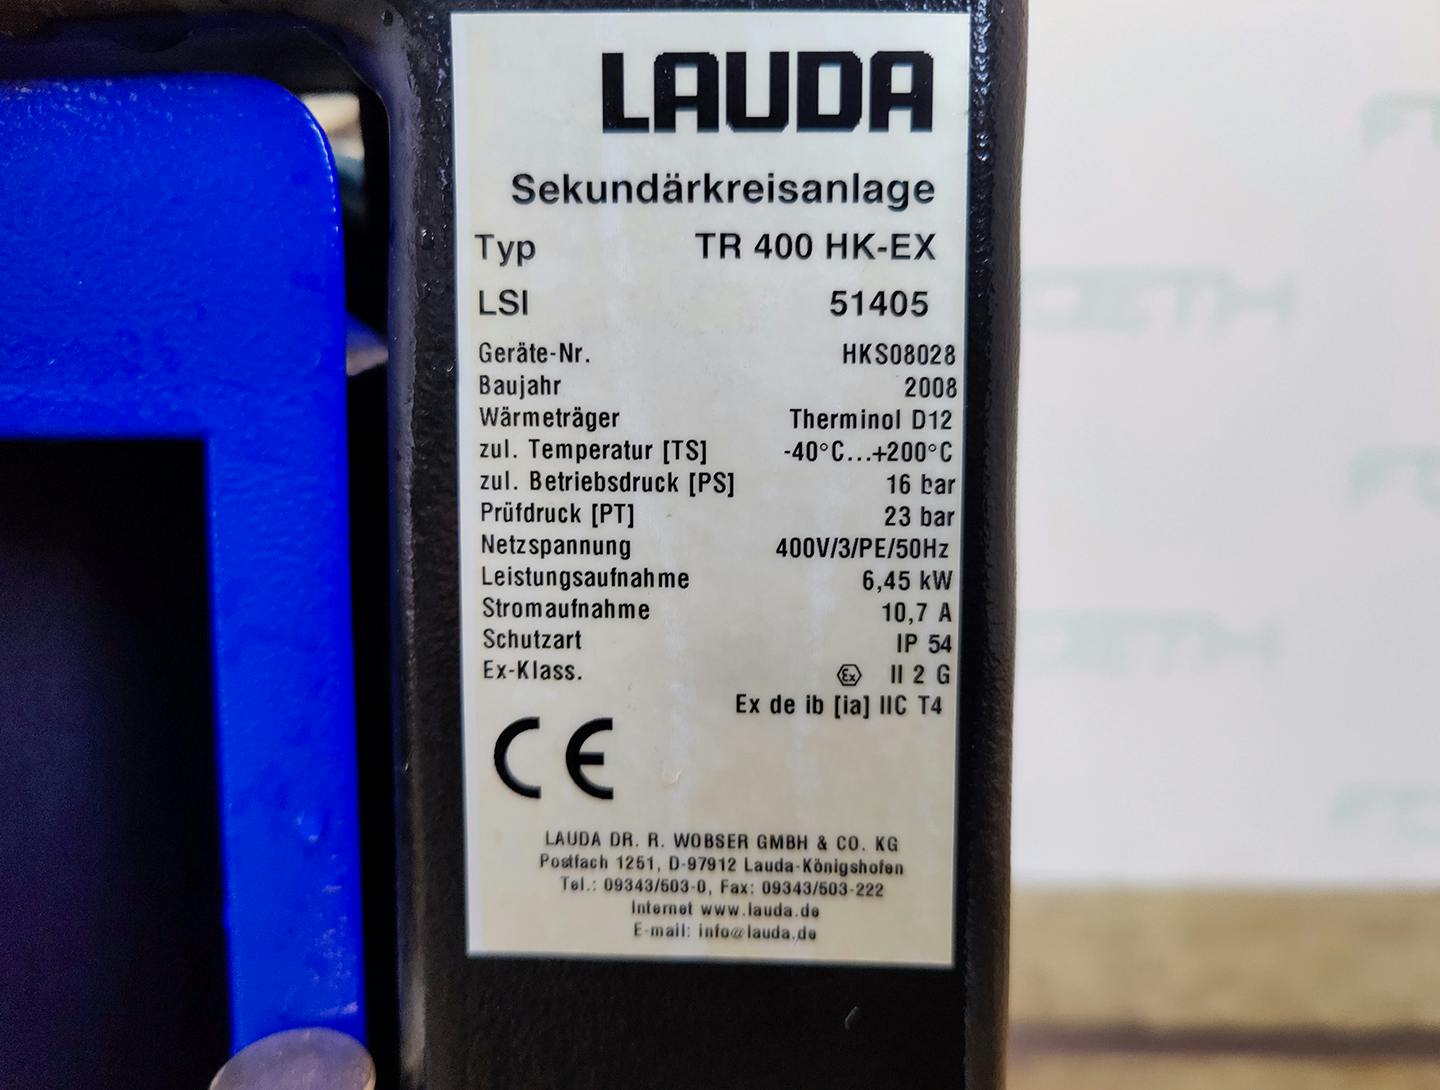 Lauda TR400 HK-EX "secondary circuit system" - циркуляционный термостат - image 6